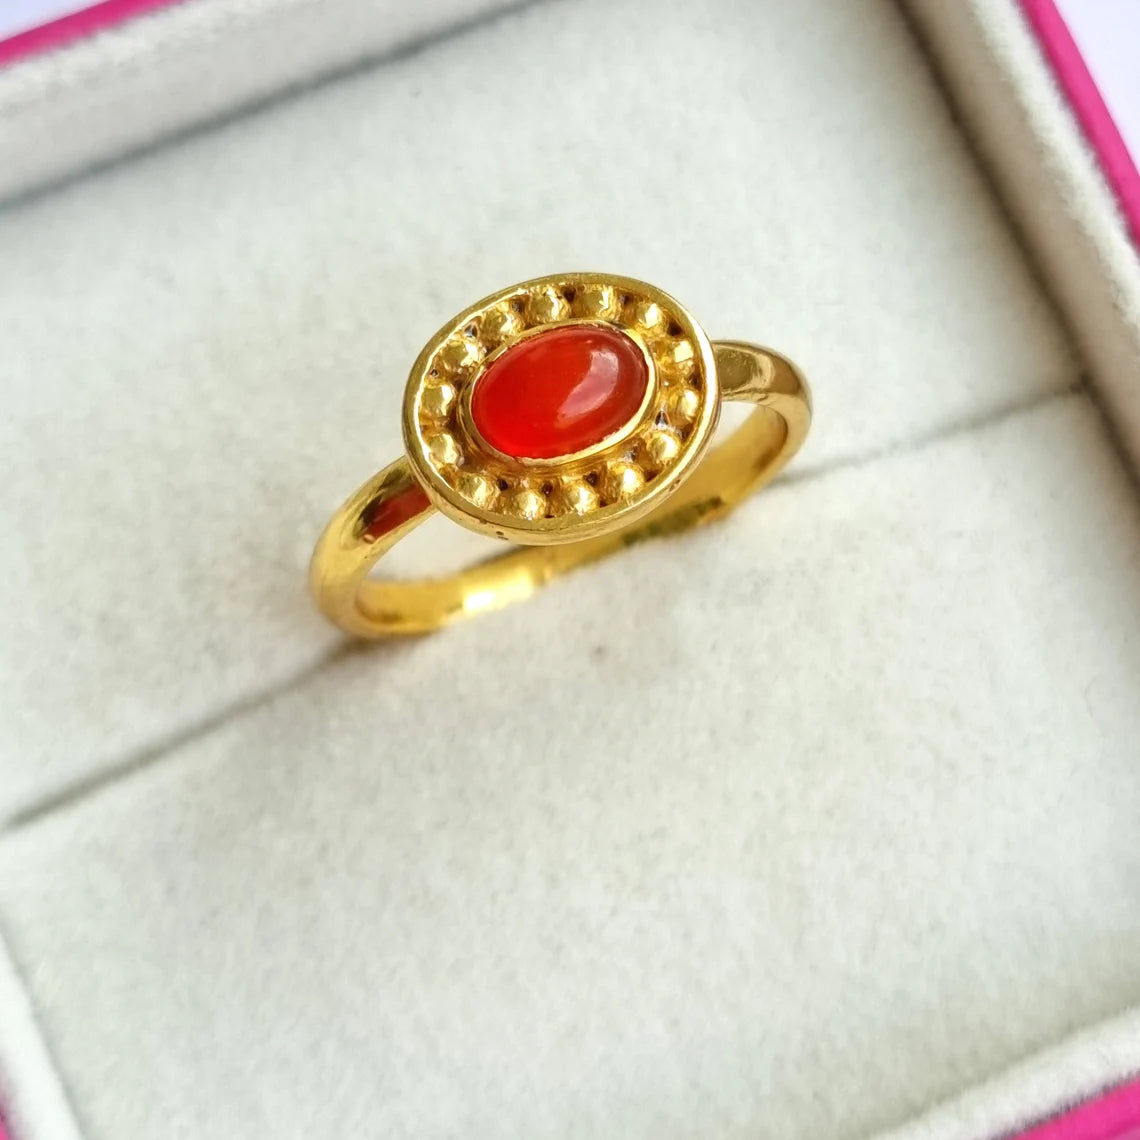 Oval Carnelian 18k Gold Ring, Carnelian Gemstone Ring, Carnelian Oval Cabochon Ring, Handmade Ring, Statement Ring, August Birthstone Ring